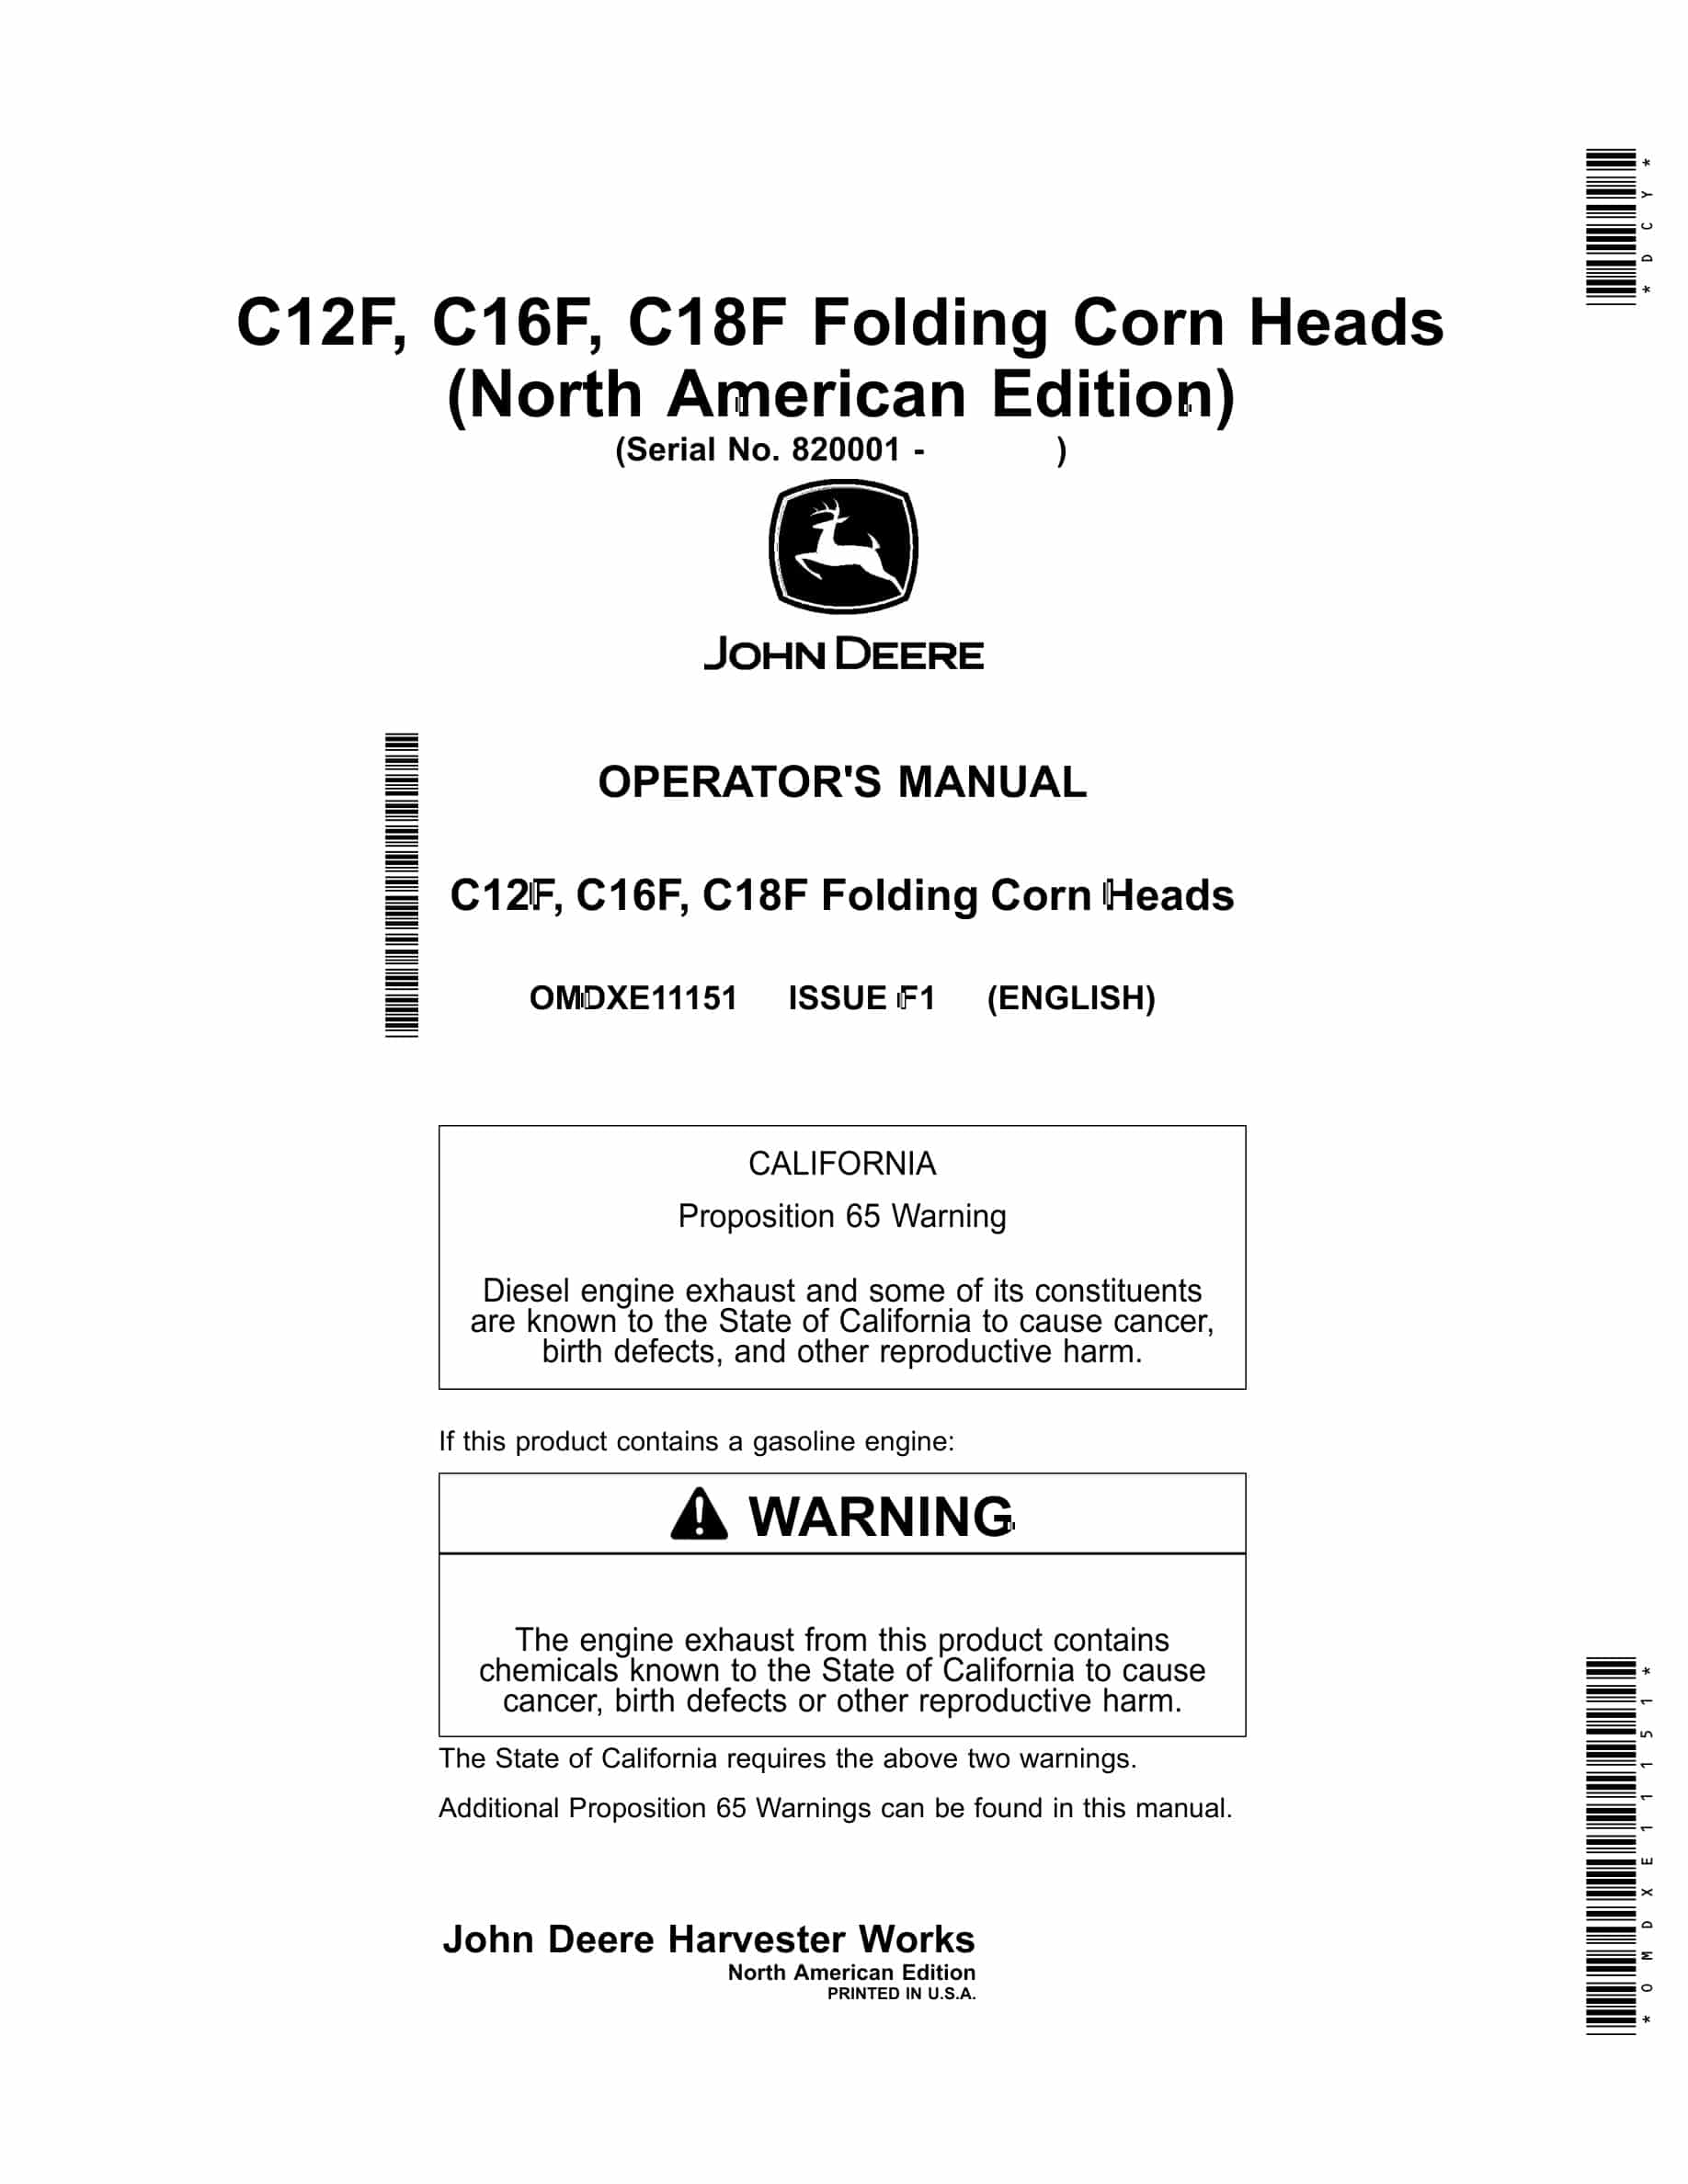 John Deere C12F, C16F, C18F Folding Corn Heads Operator Manual OMDXE11151-1